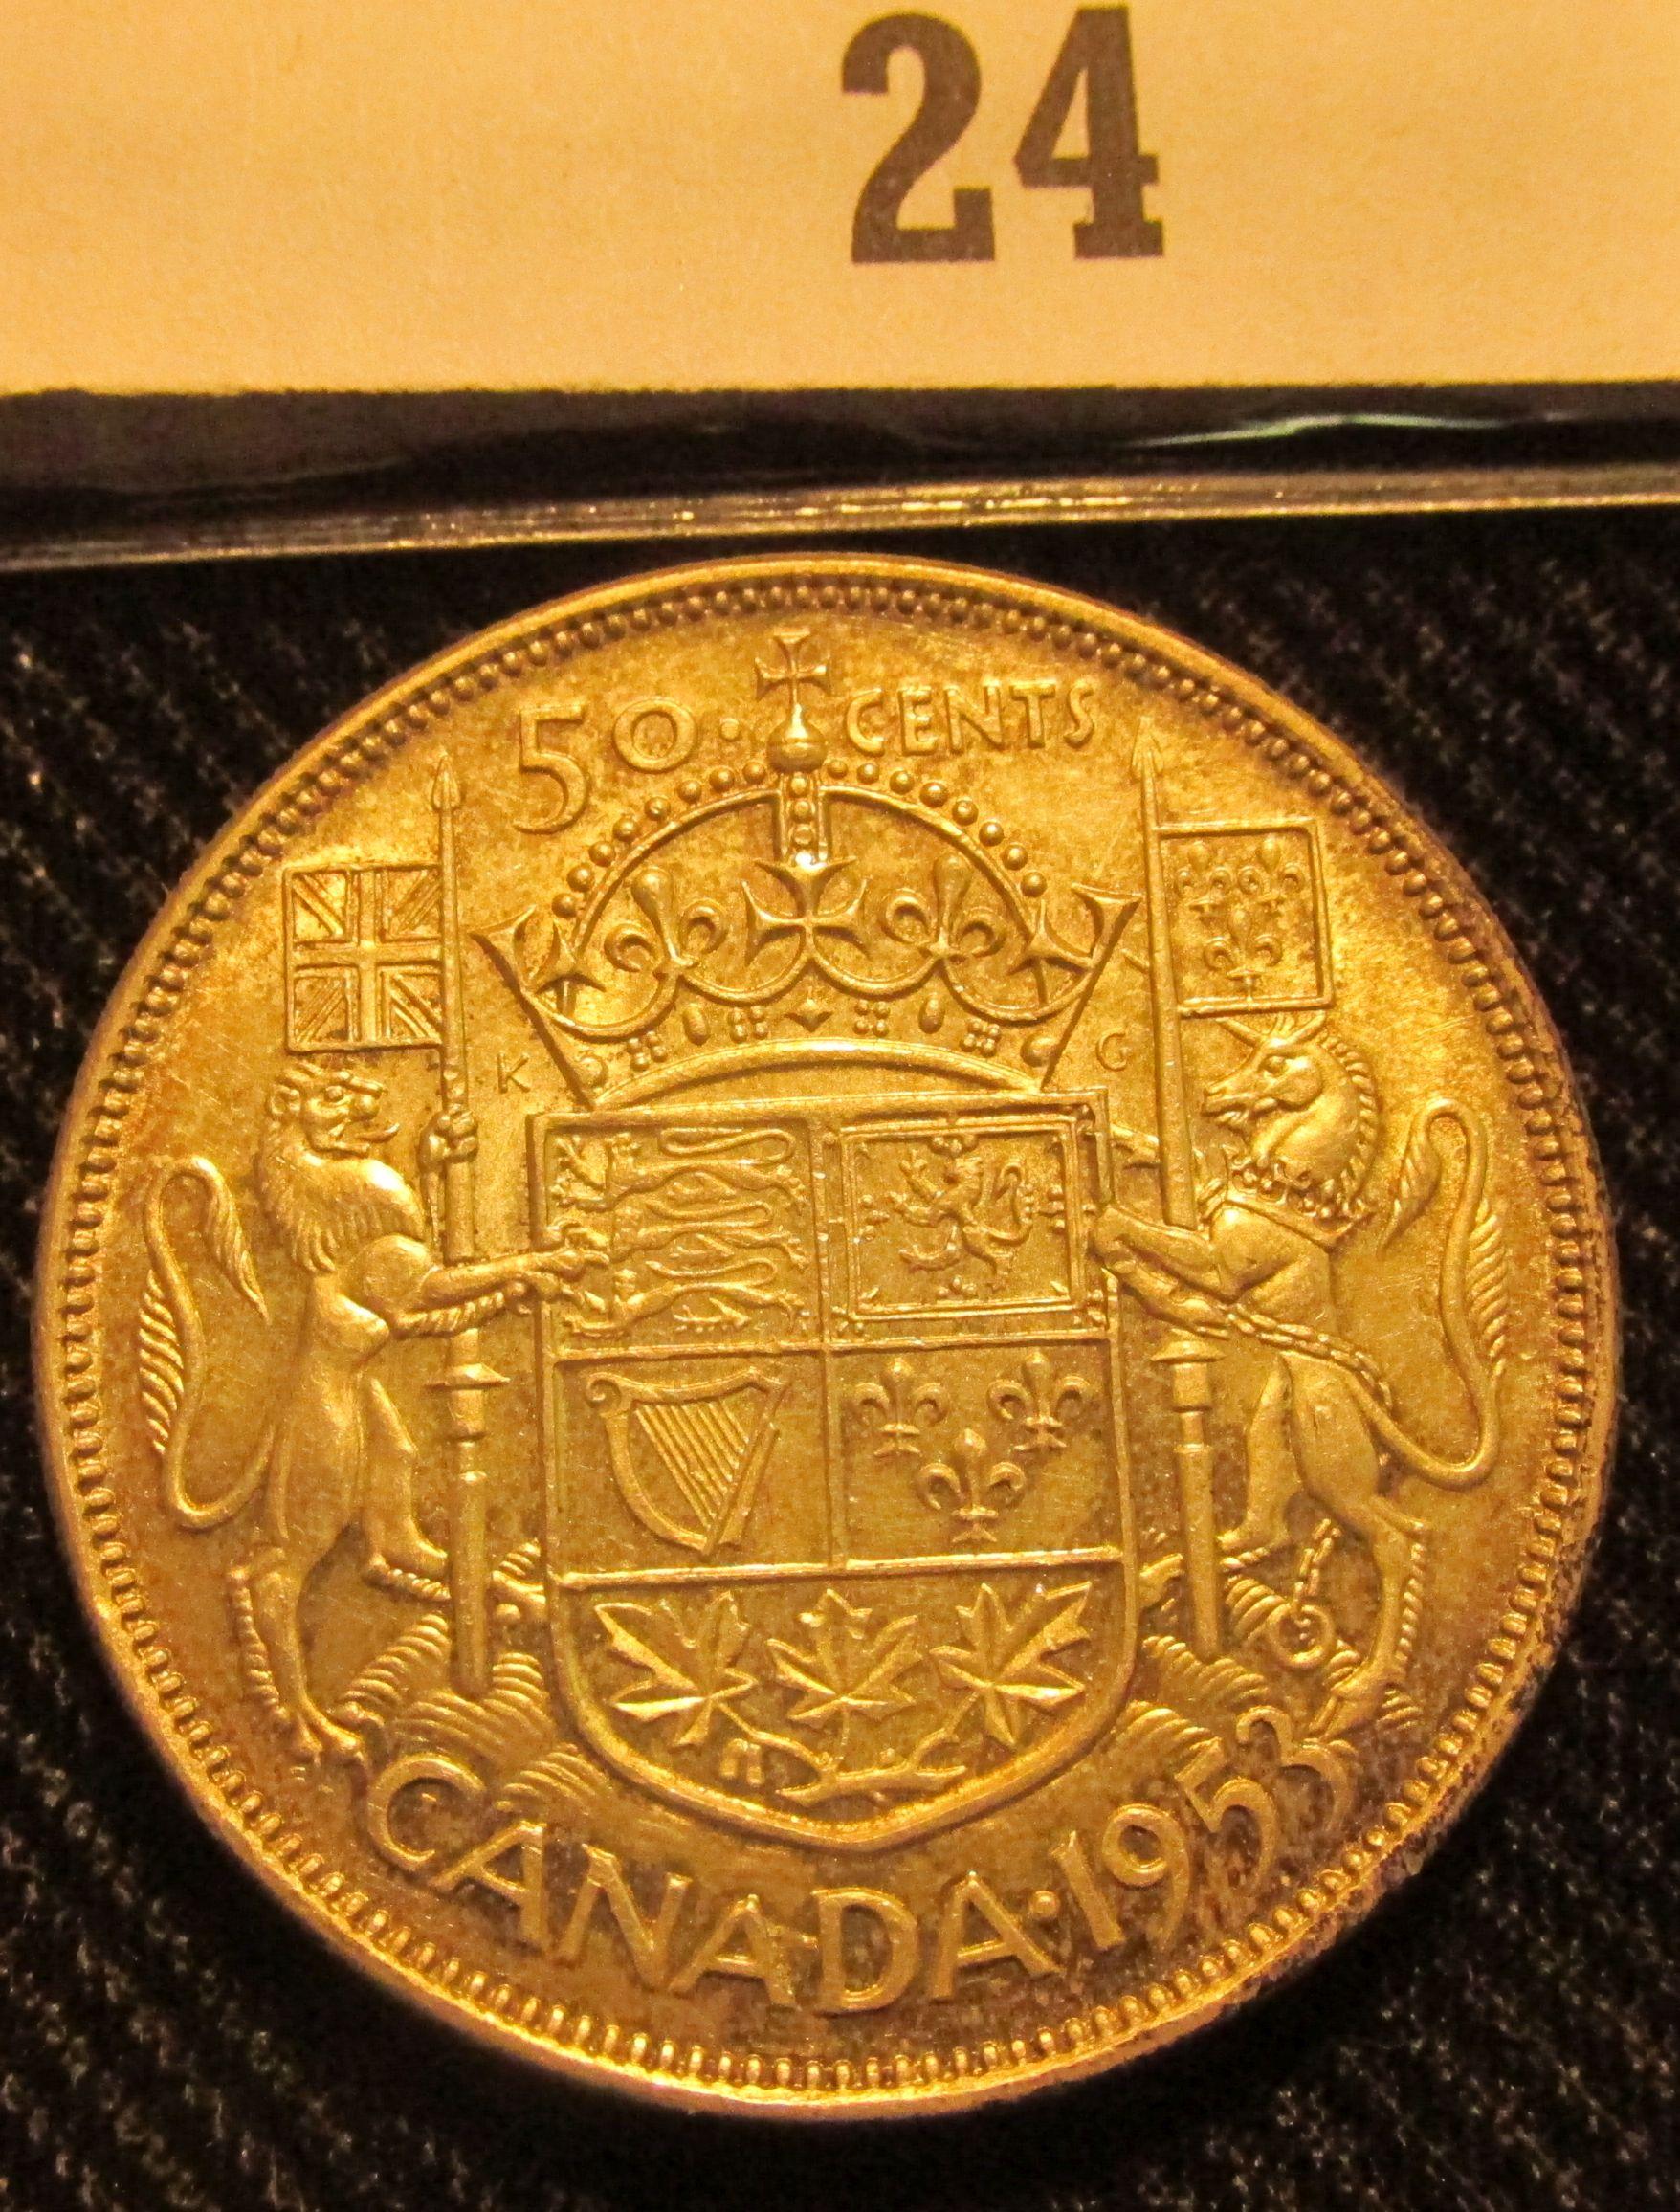 1953 Canada Silver Half Dollar, light toning.